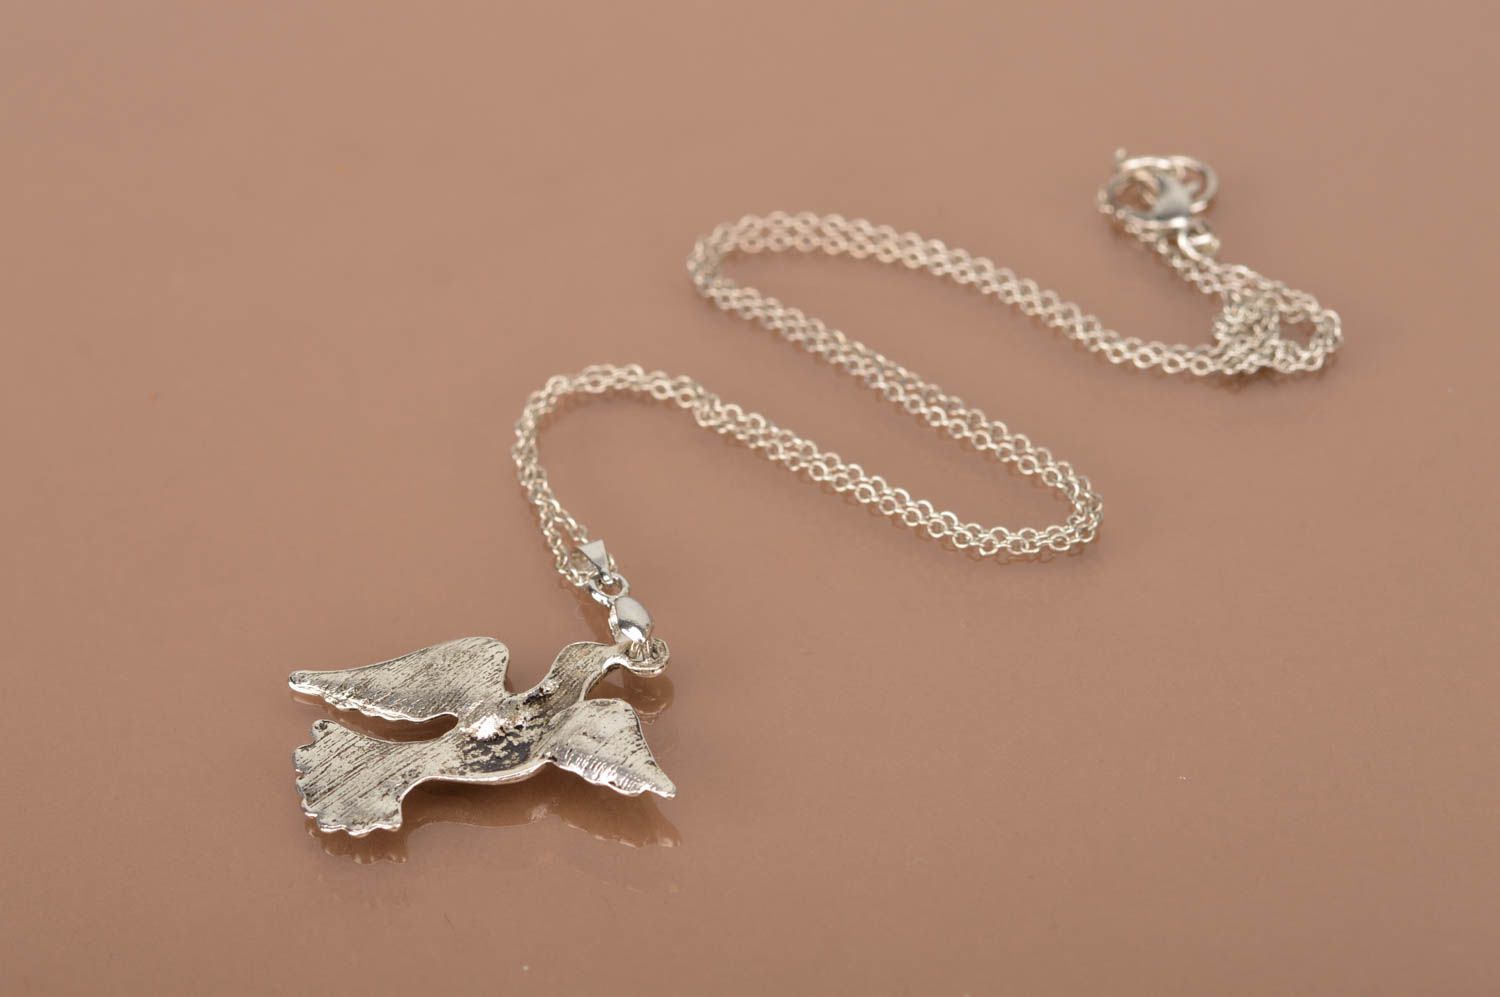 Beautiful handmade metal pendant metal jewelry designer gifts for her photo 5